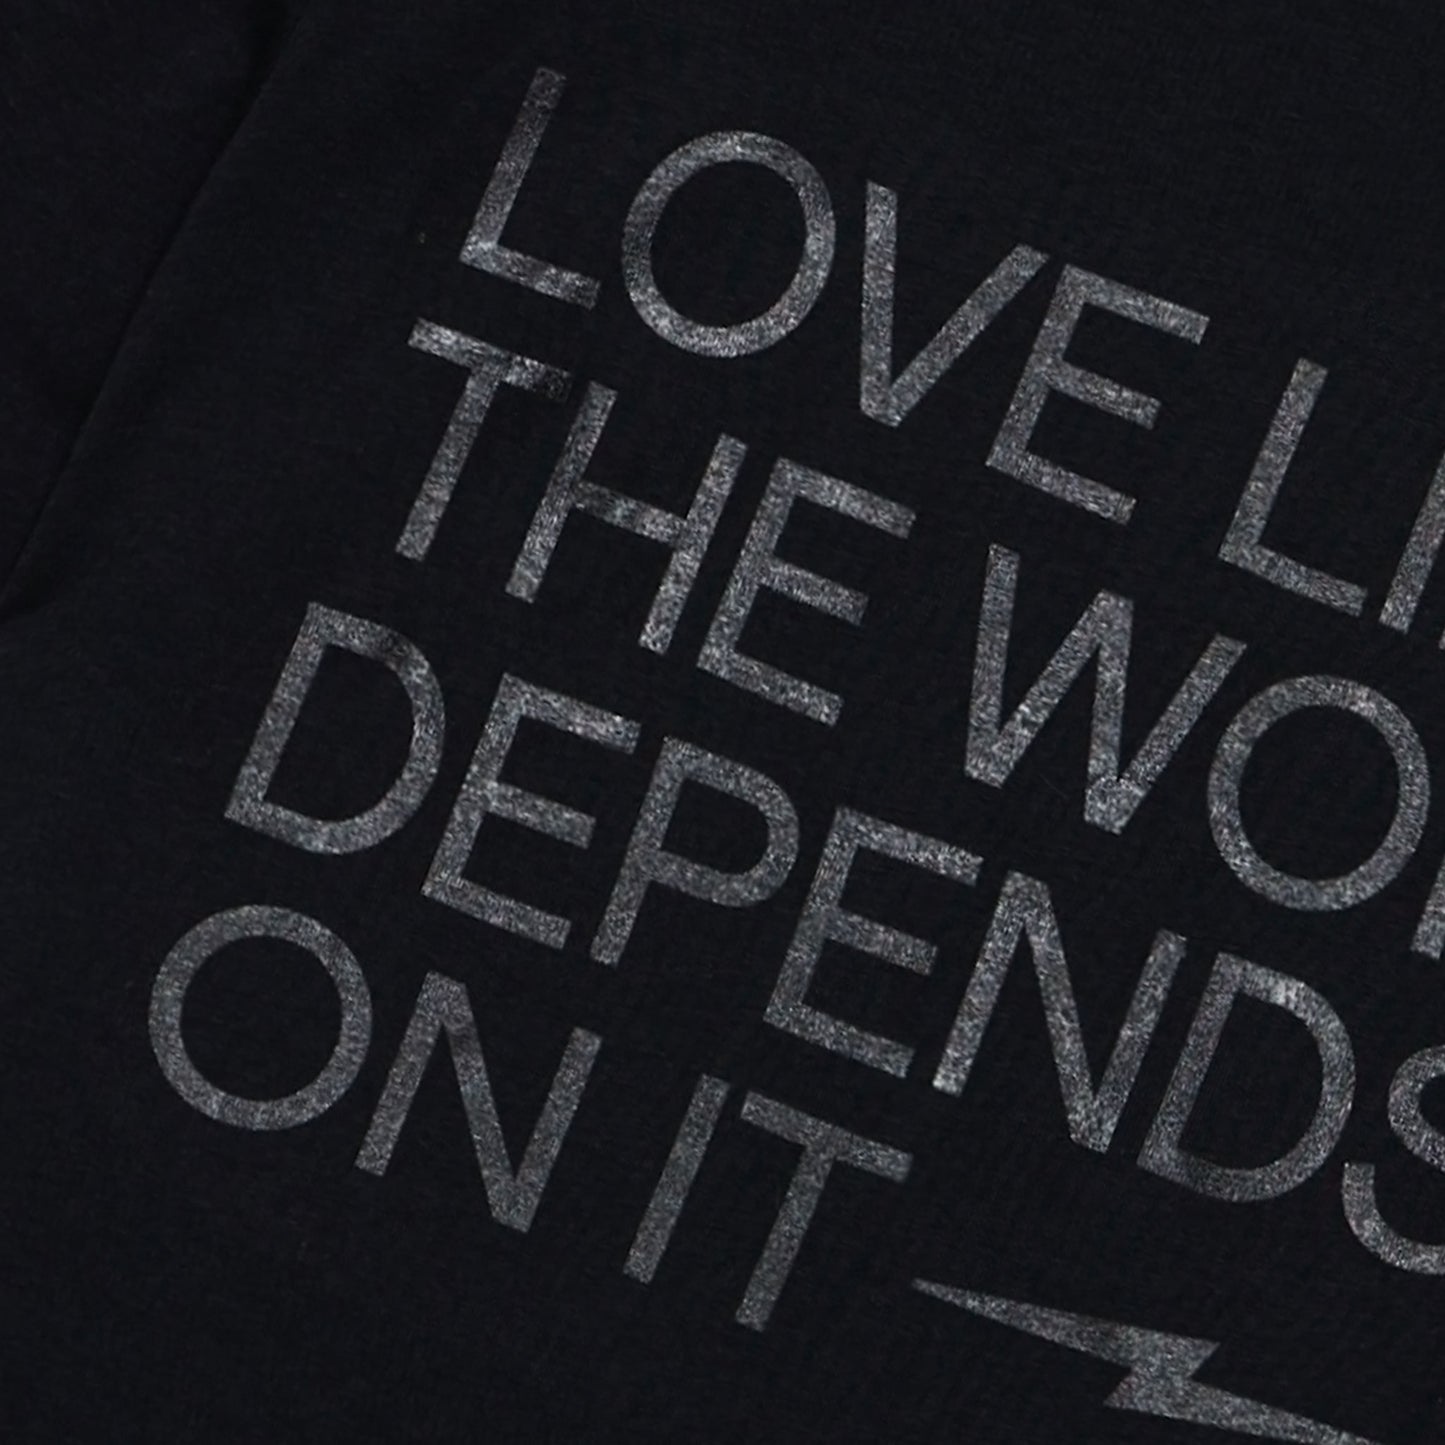 Women's LegacyTech T-Shirt - Black - Love